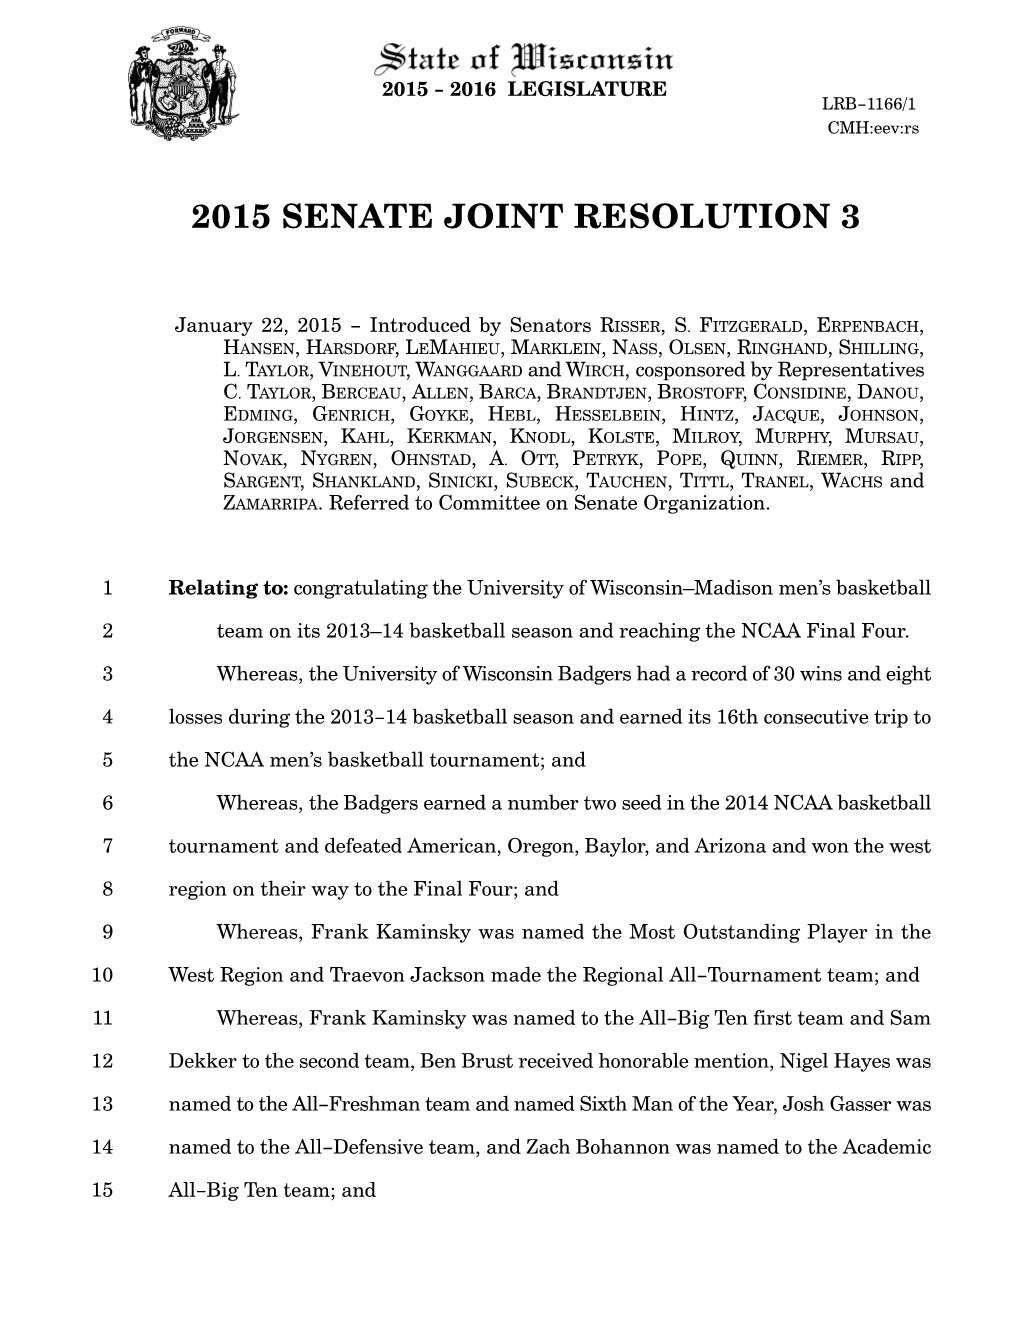 2015 Senate Joint Resolution 3